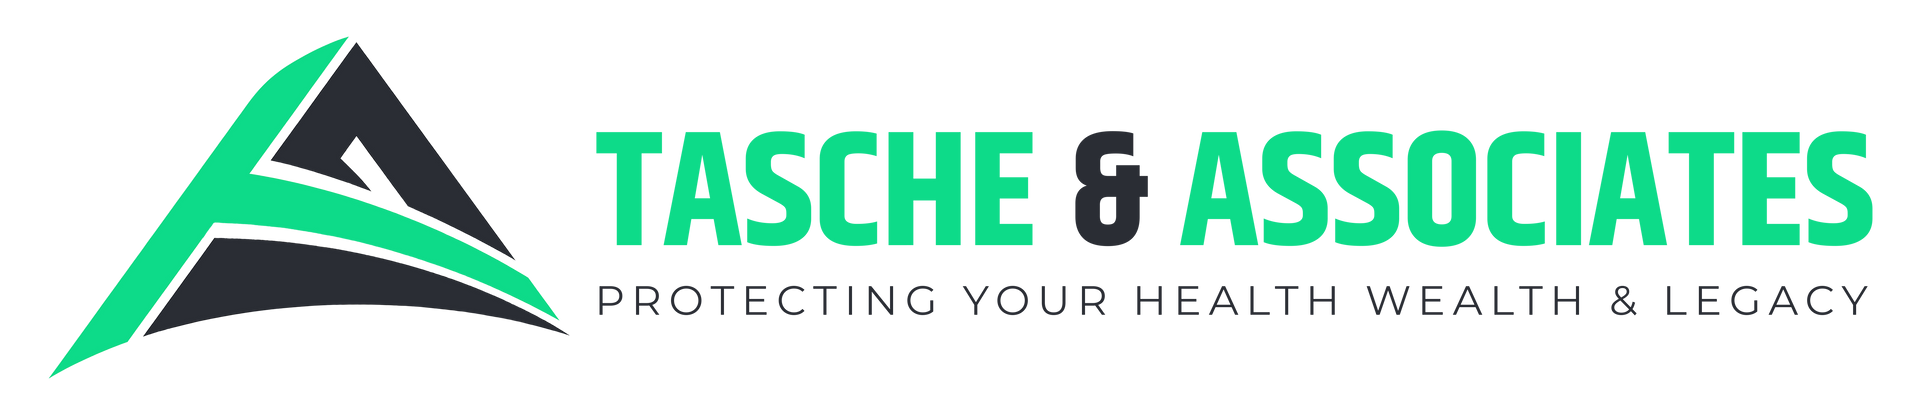 A green and black logo for tasche & associates